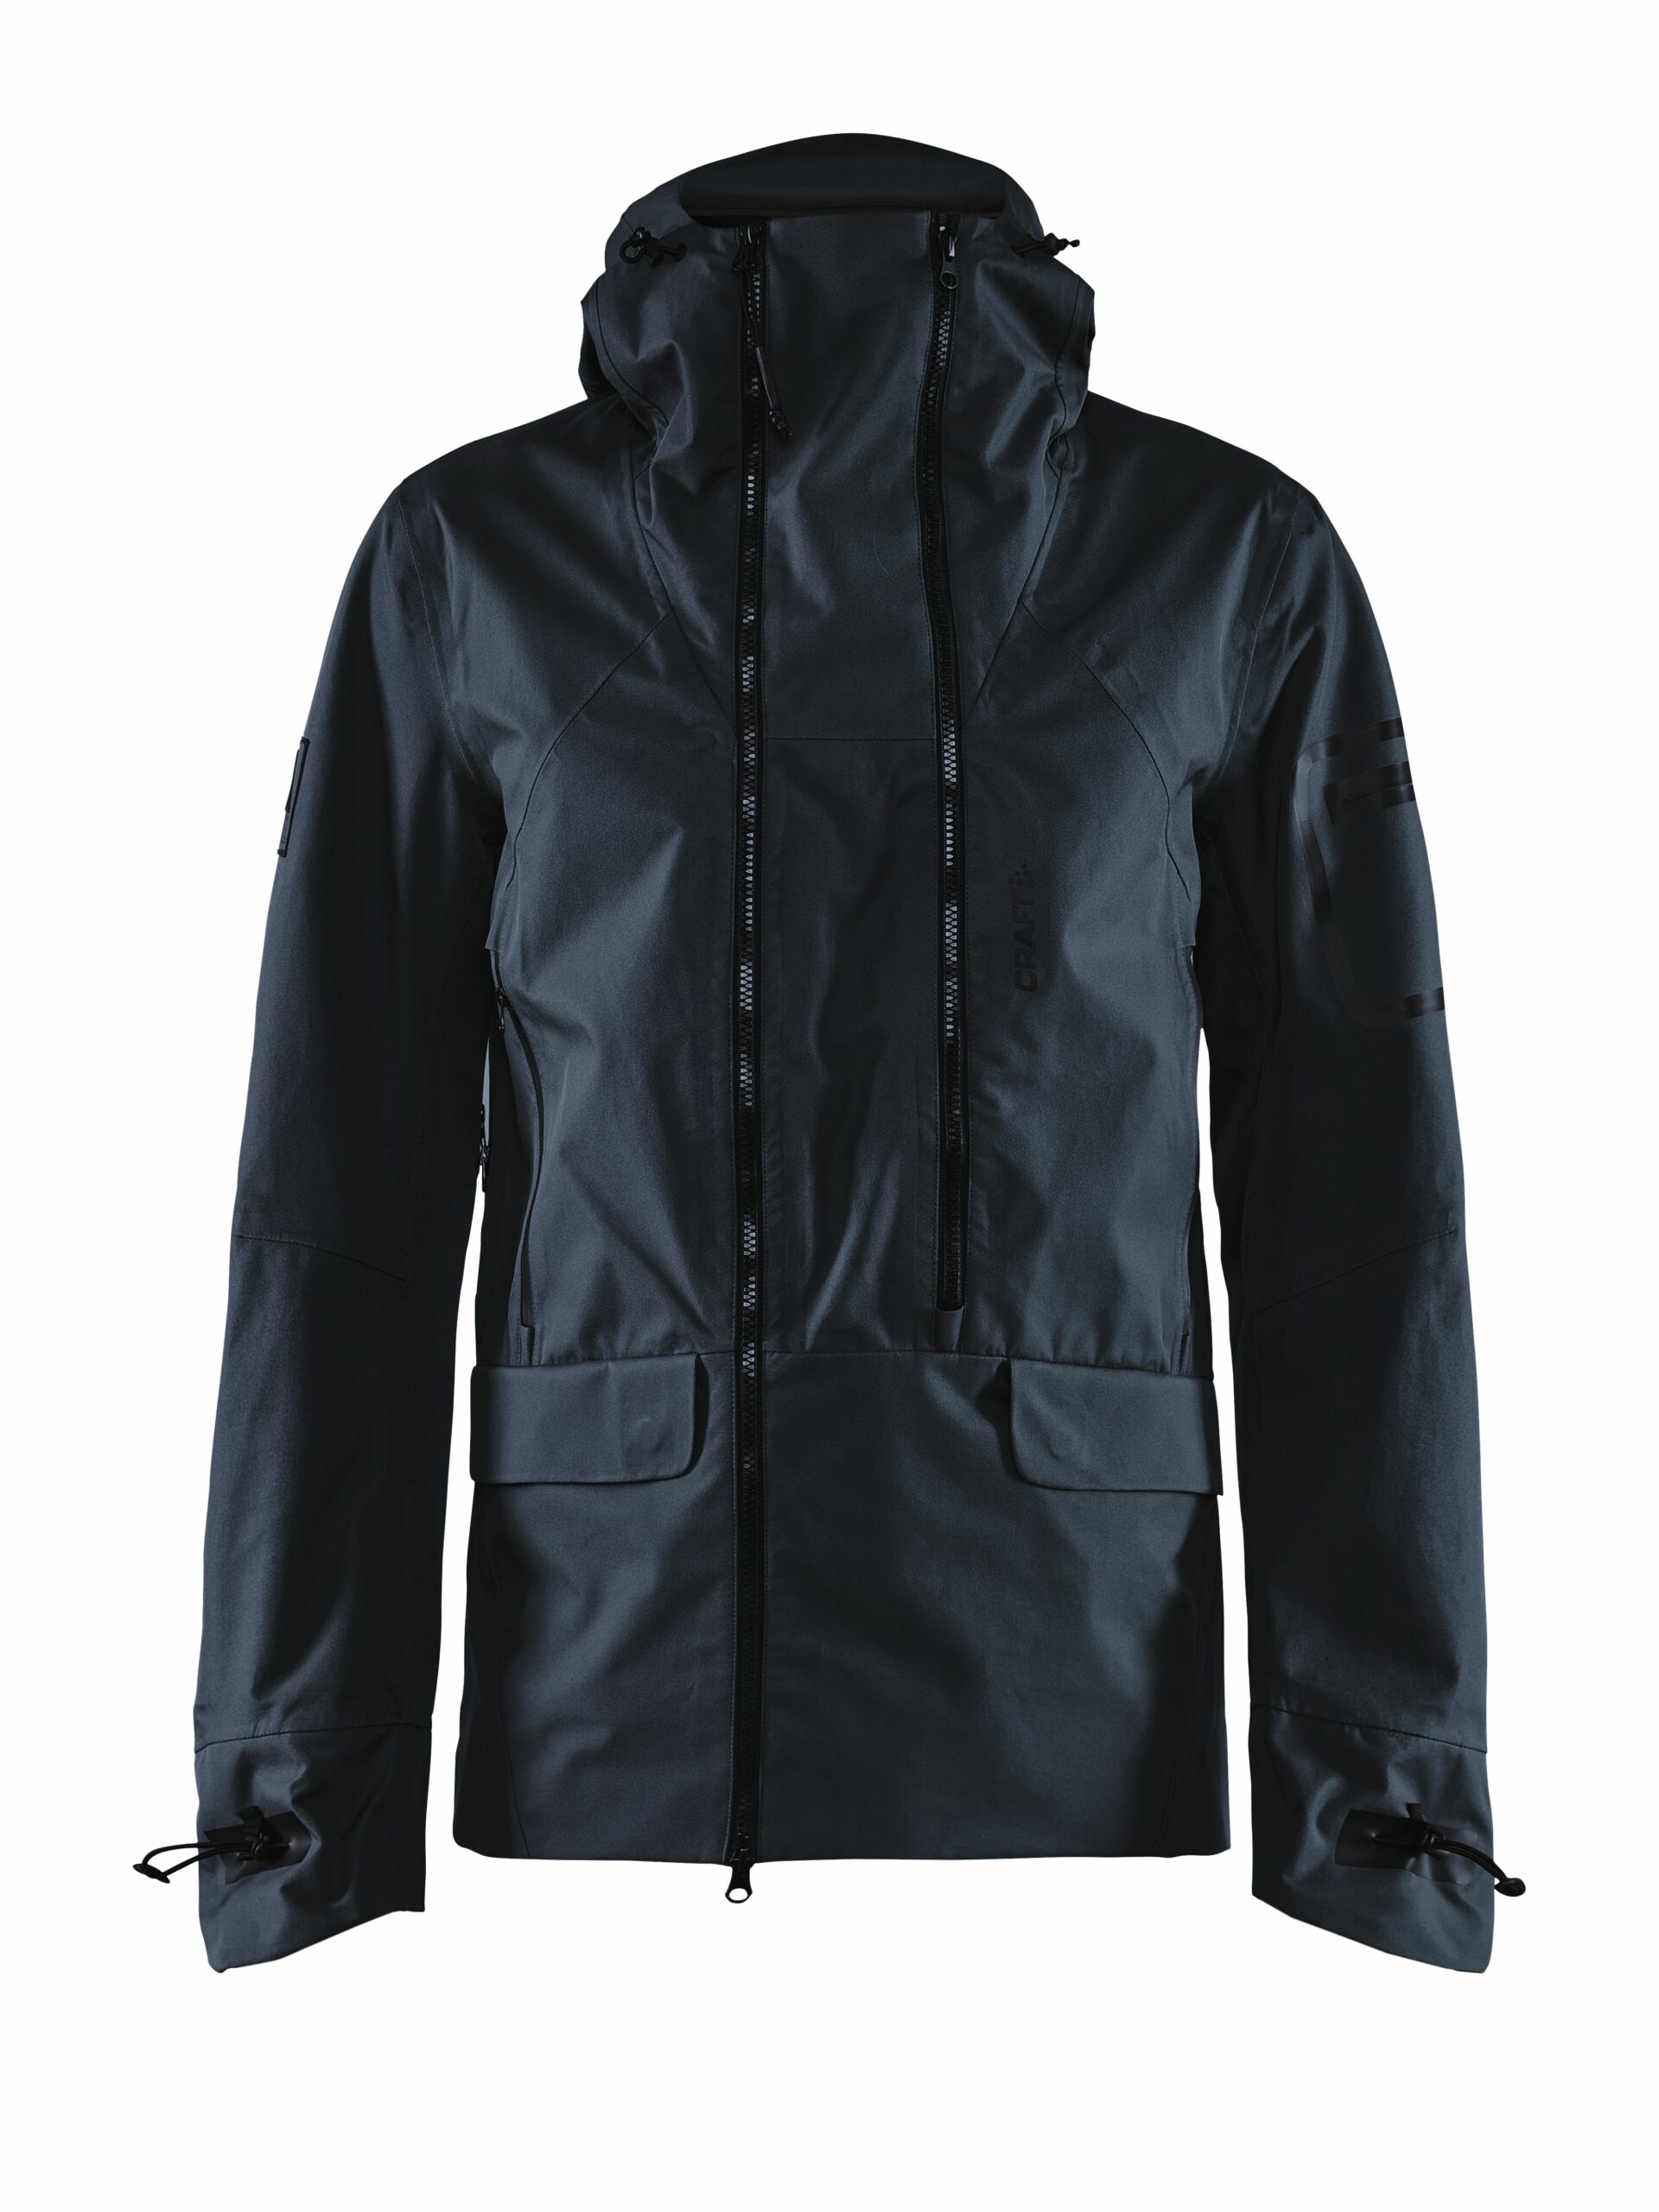 Craft - Polar shell jacket Maend - Black L